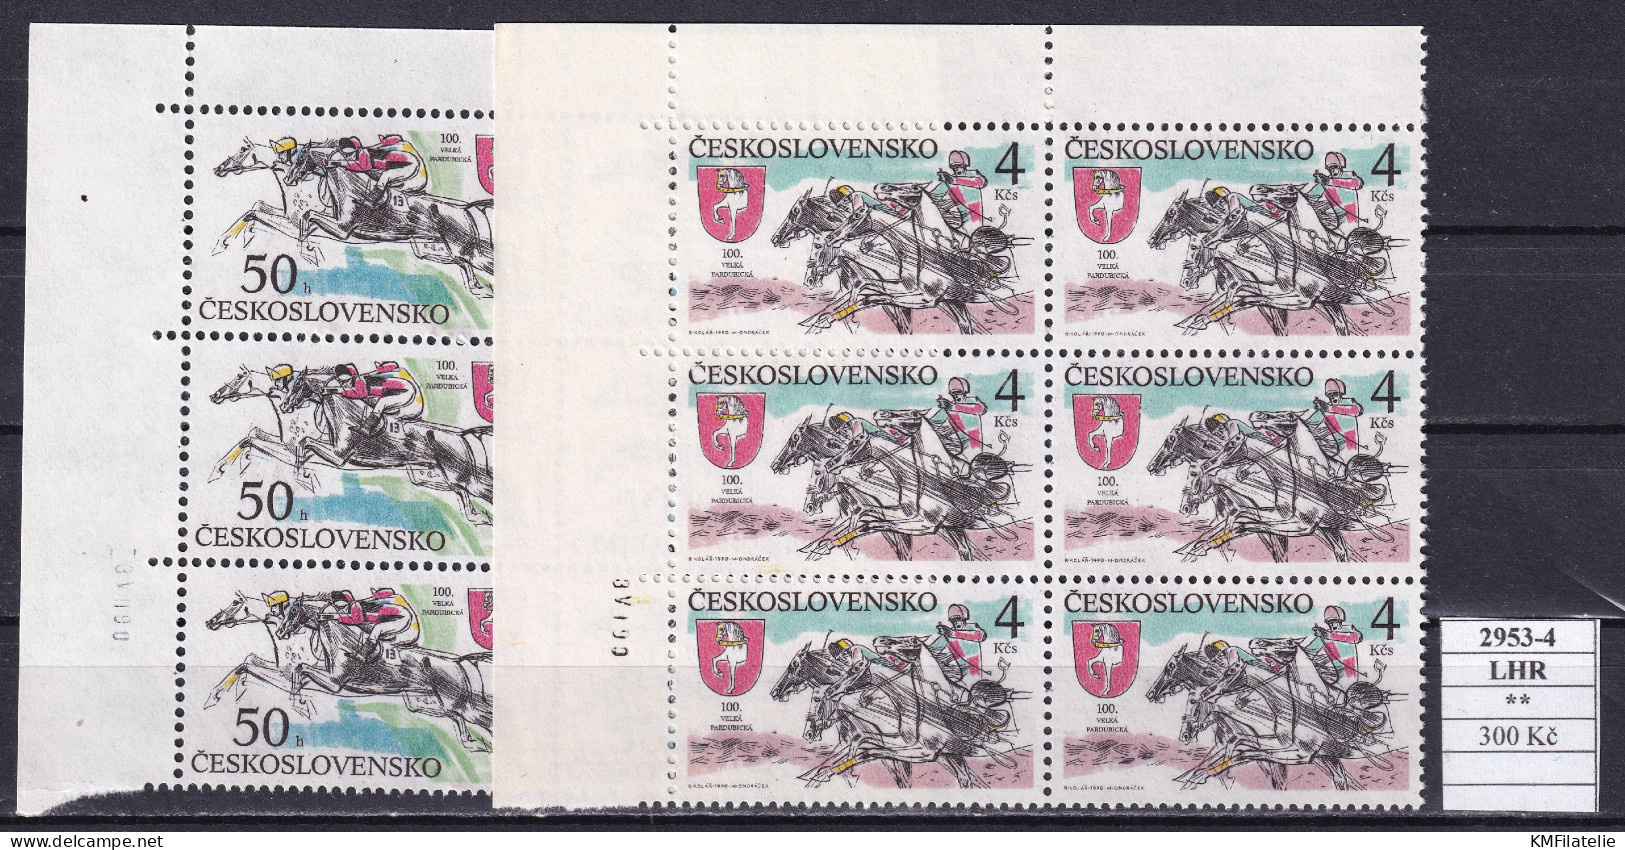 Czechoslovakia Pofis 2953-4 LHR MNH - Unused Stamps